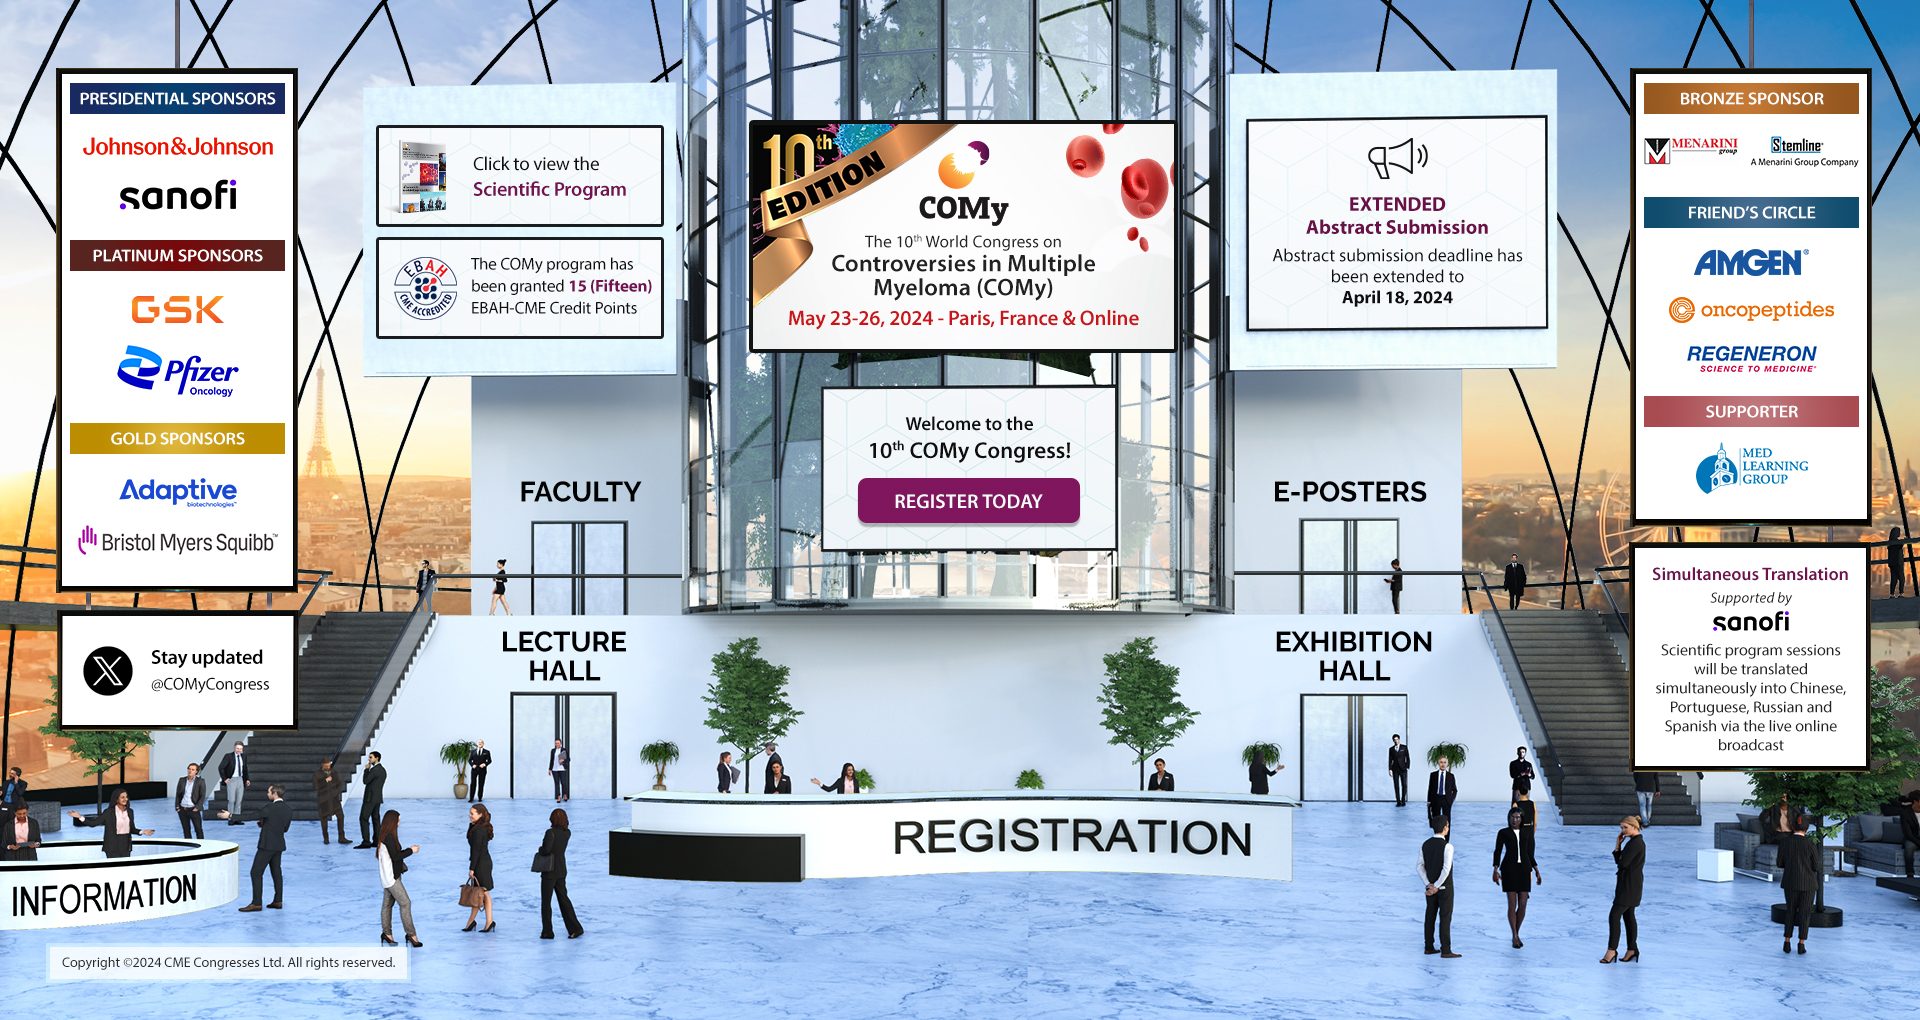 The 10th COMy World Congress